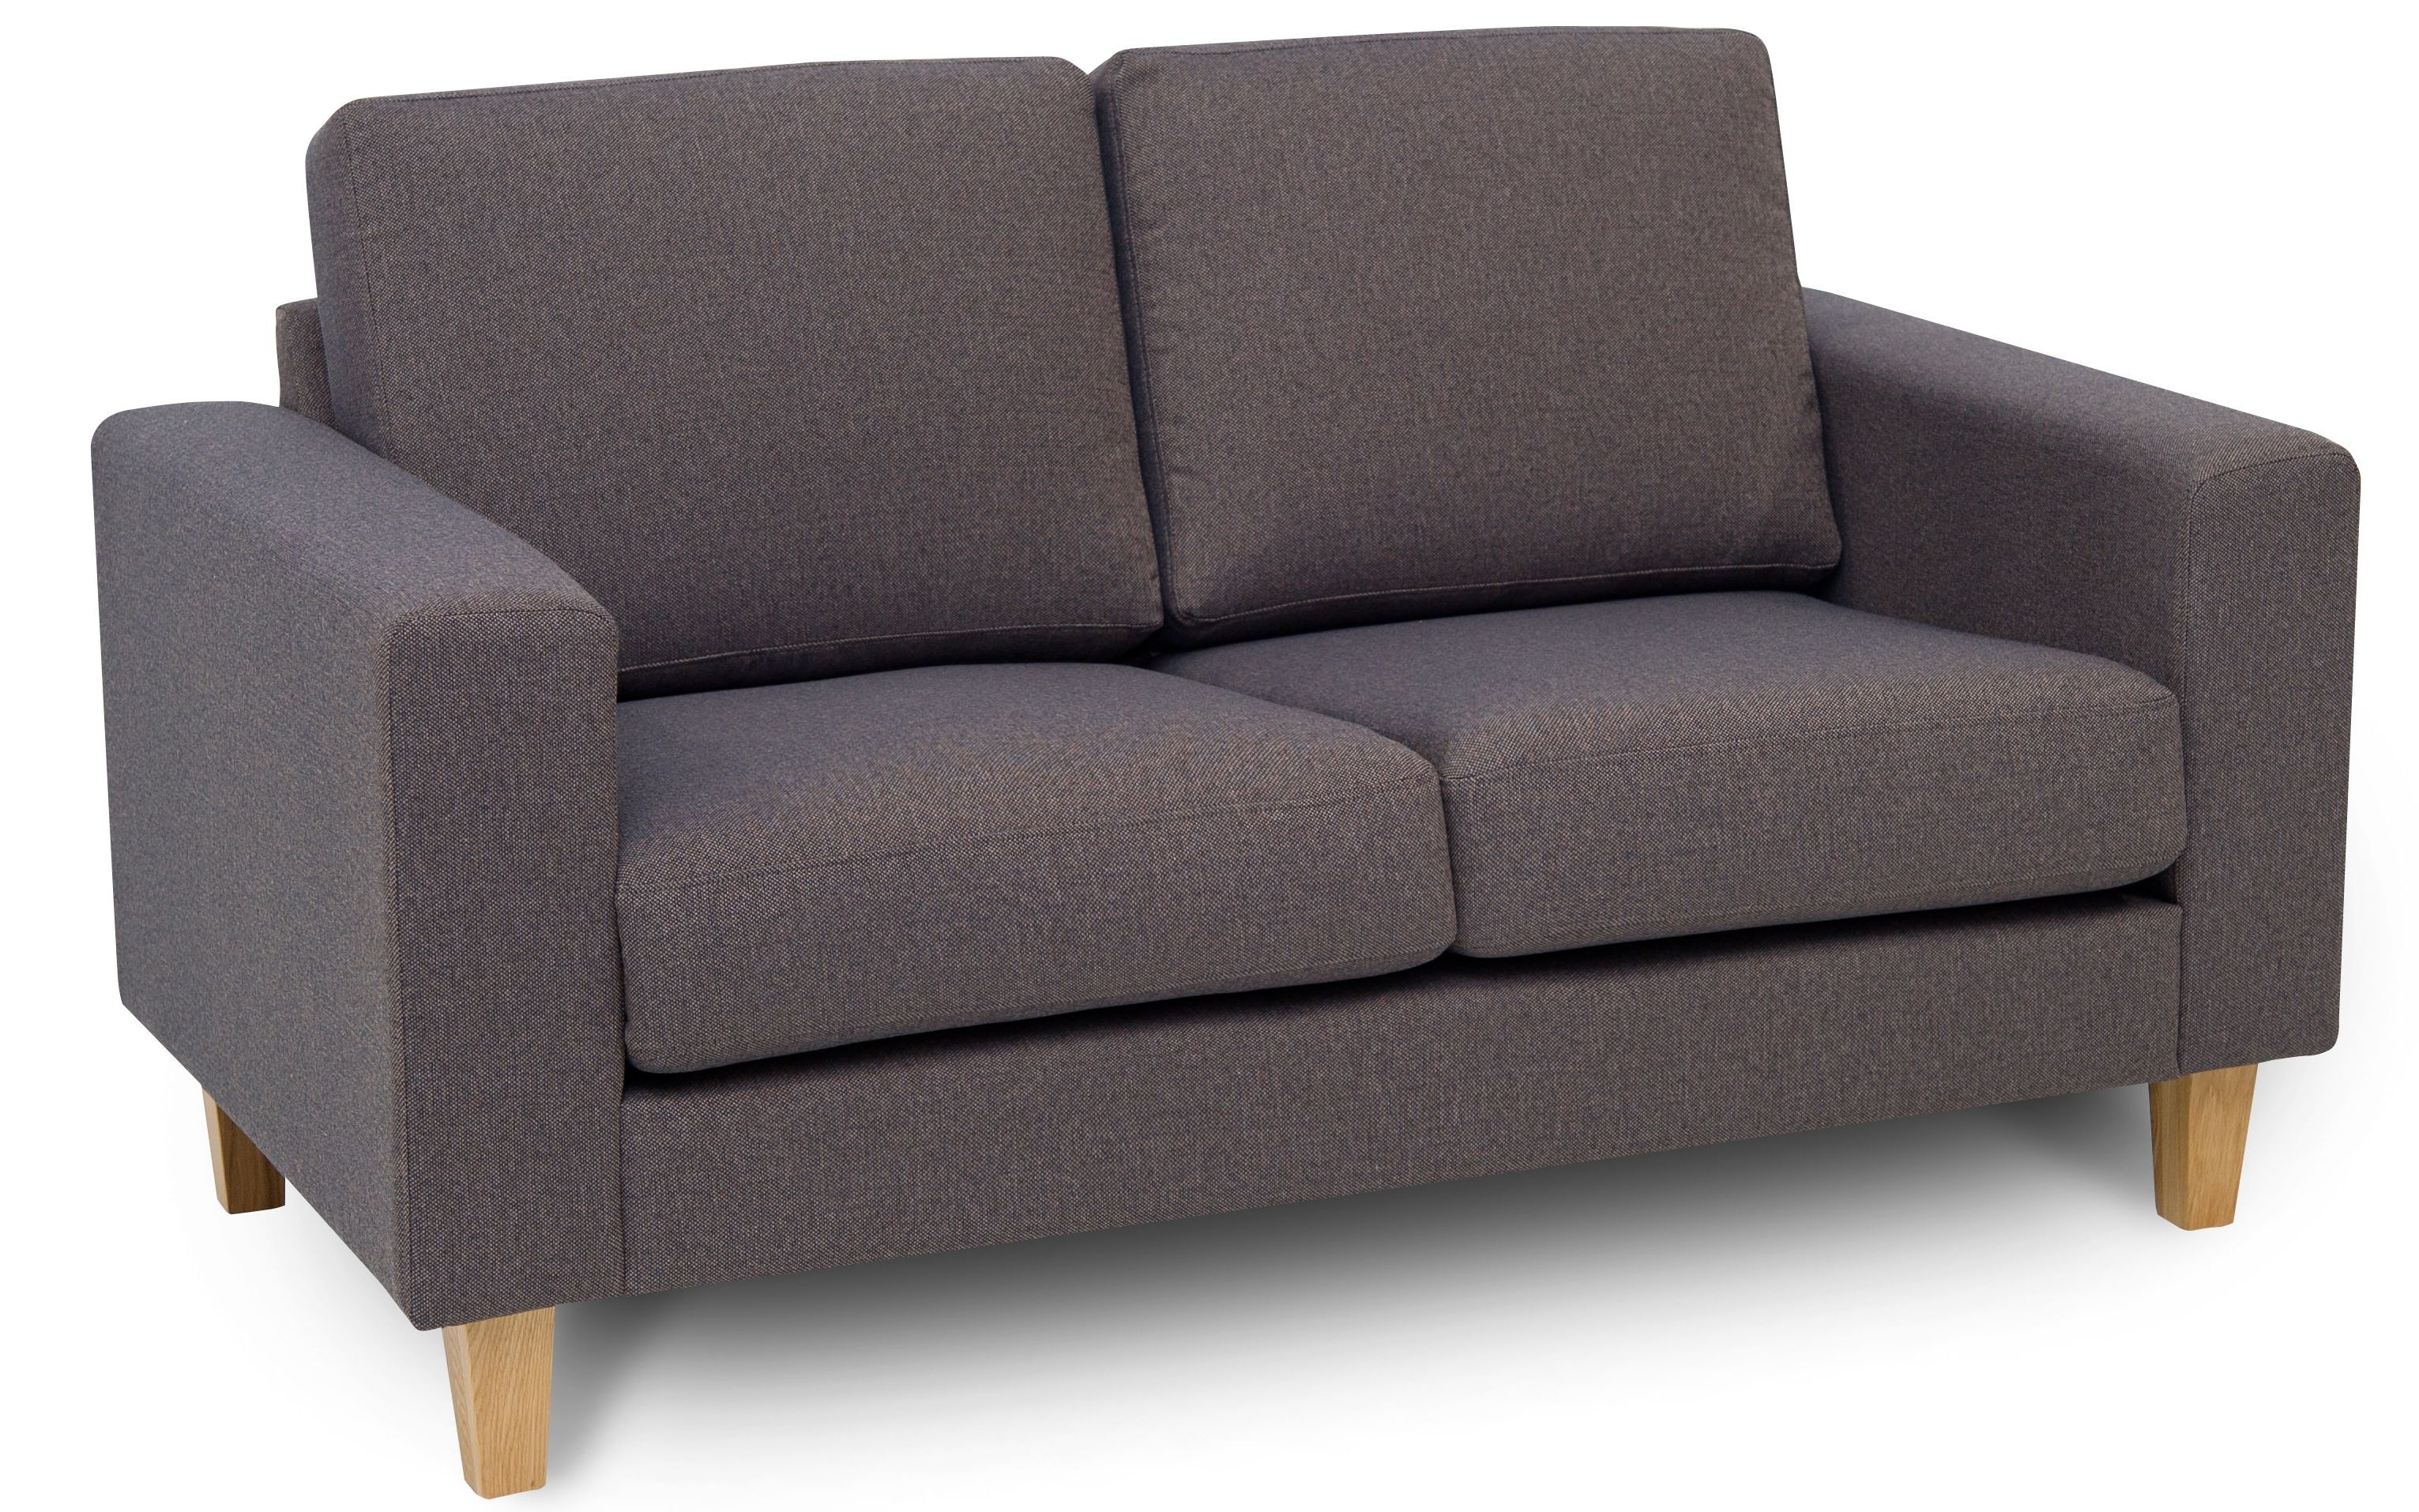 Buy At Kontenta Within Favorite Two Seater Sofas (View 4 of 15)